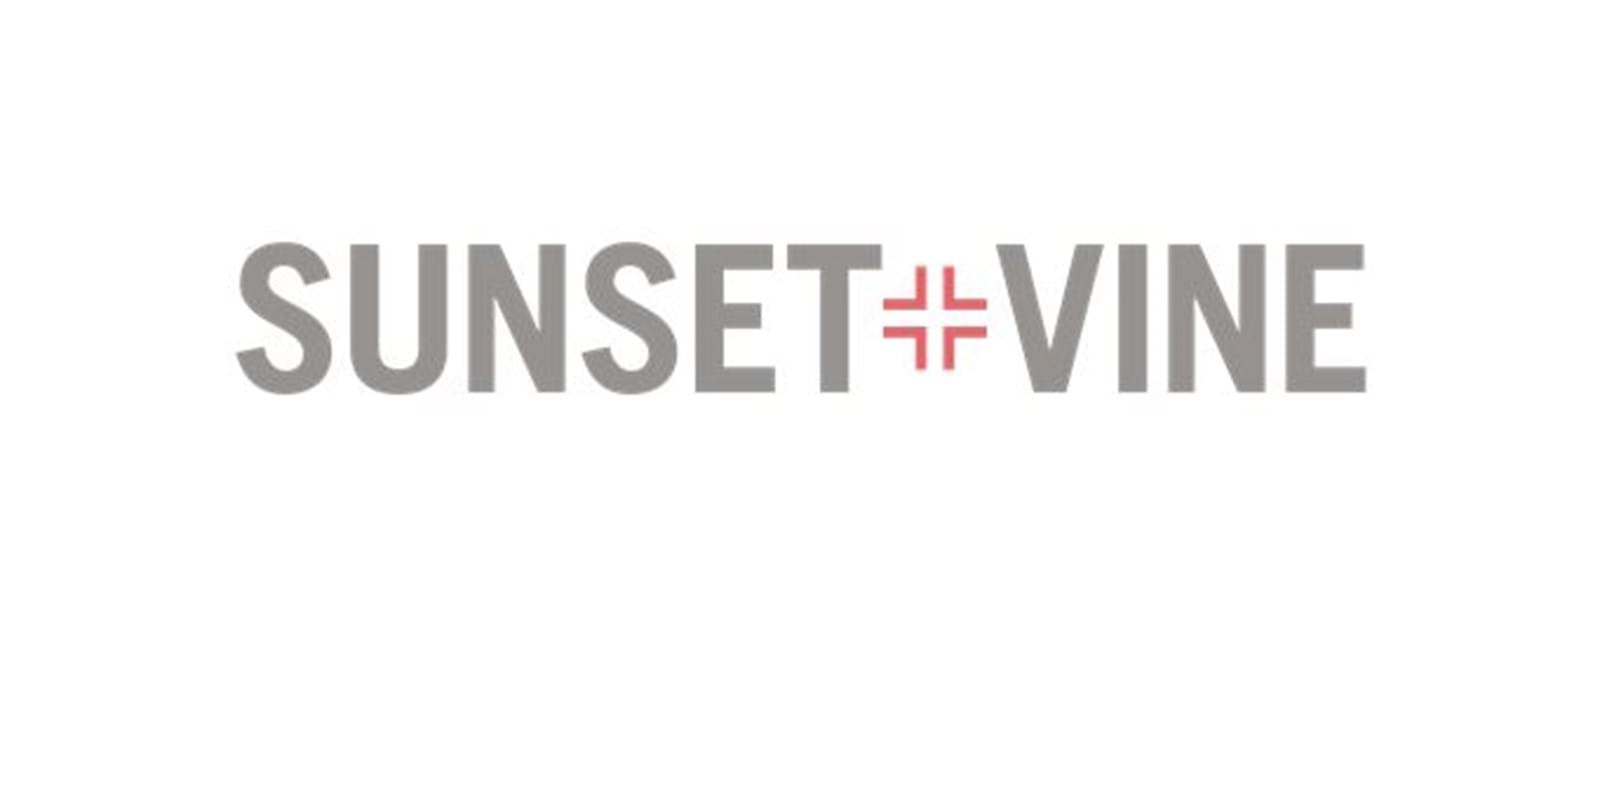 Sunset+Vine rises to the INEOS 1:59 Challenge